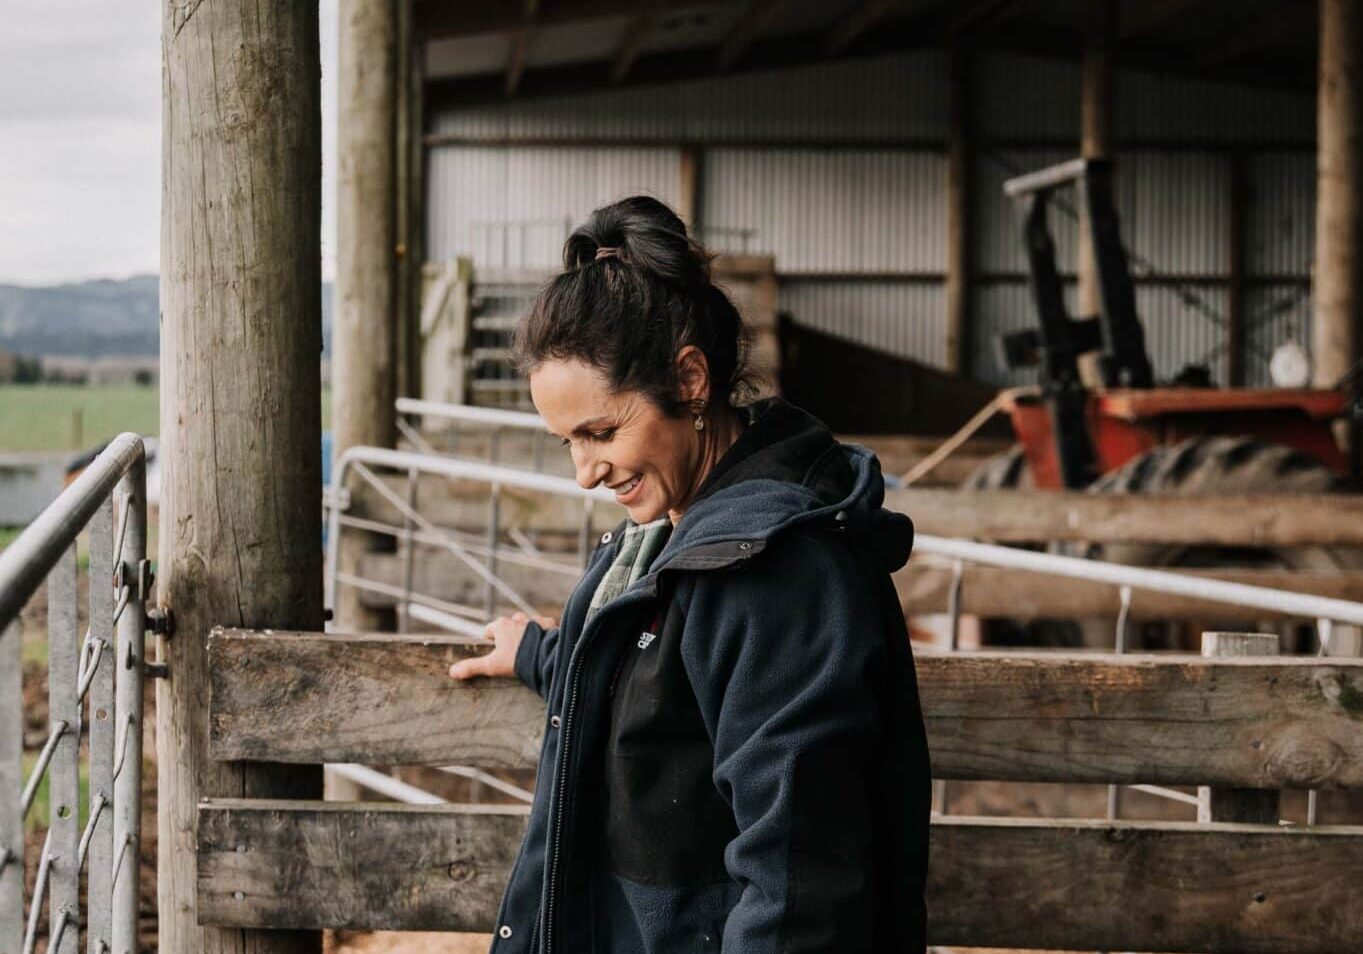 Karen McLeod feeds her calves on her dairy farm in Hawkes Bay, NZ.